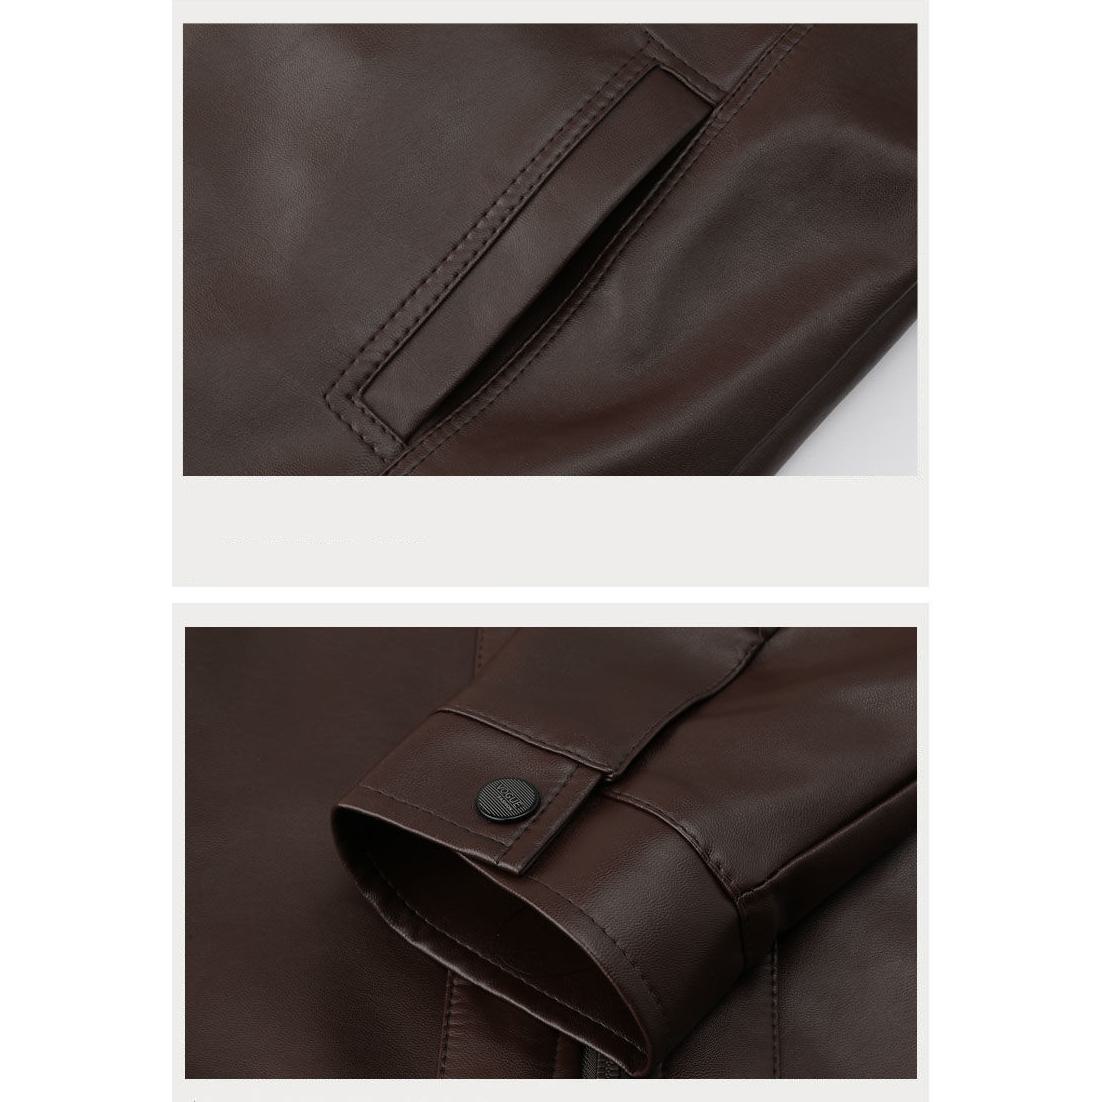 Fleece-Lined Lapel Collar Leather Jacket